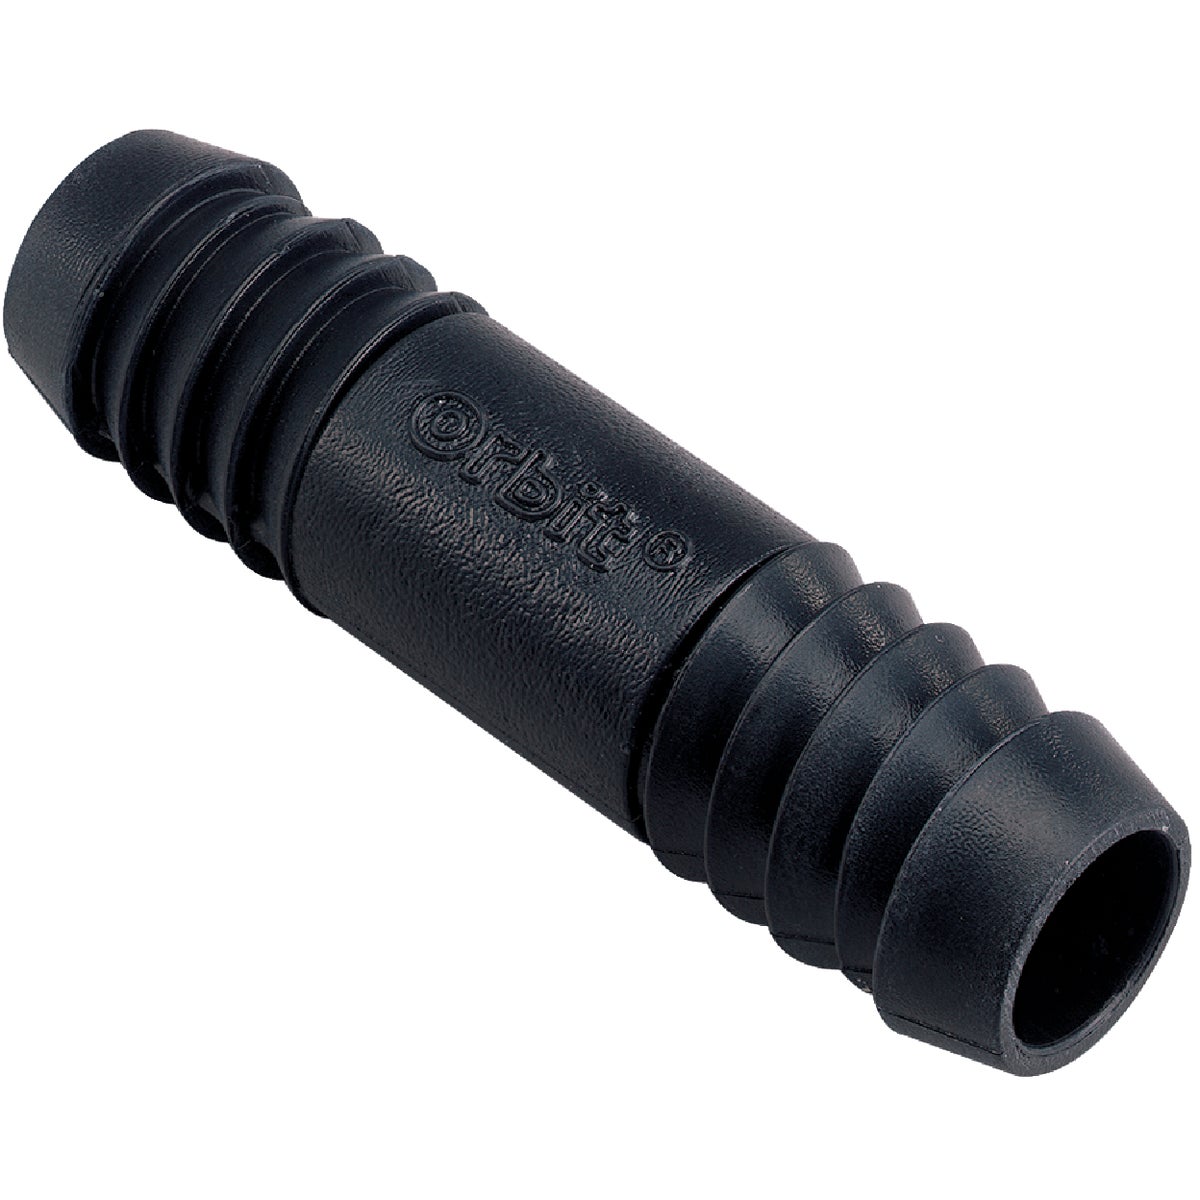 Item 700318, Riser flex fitting ideal for adding versatility to a sprinkler system.